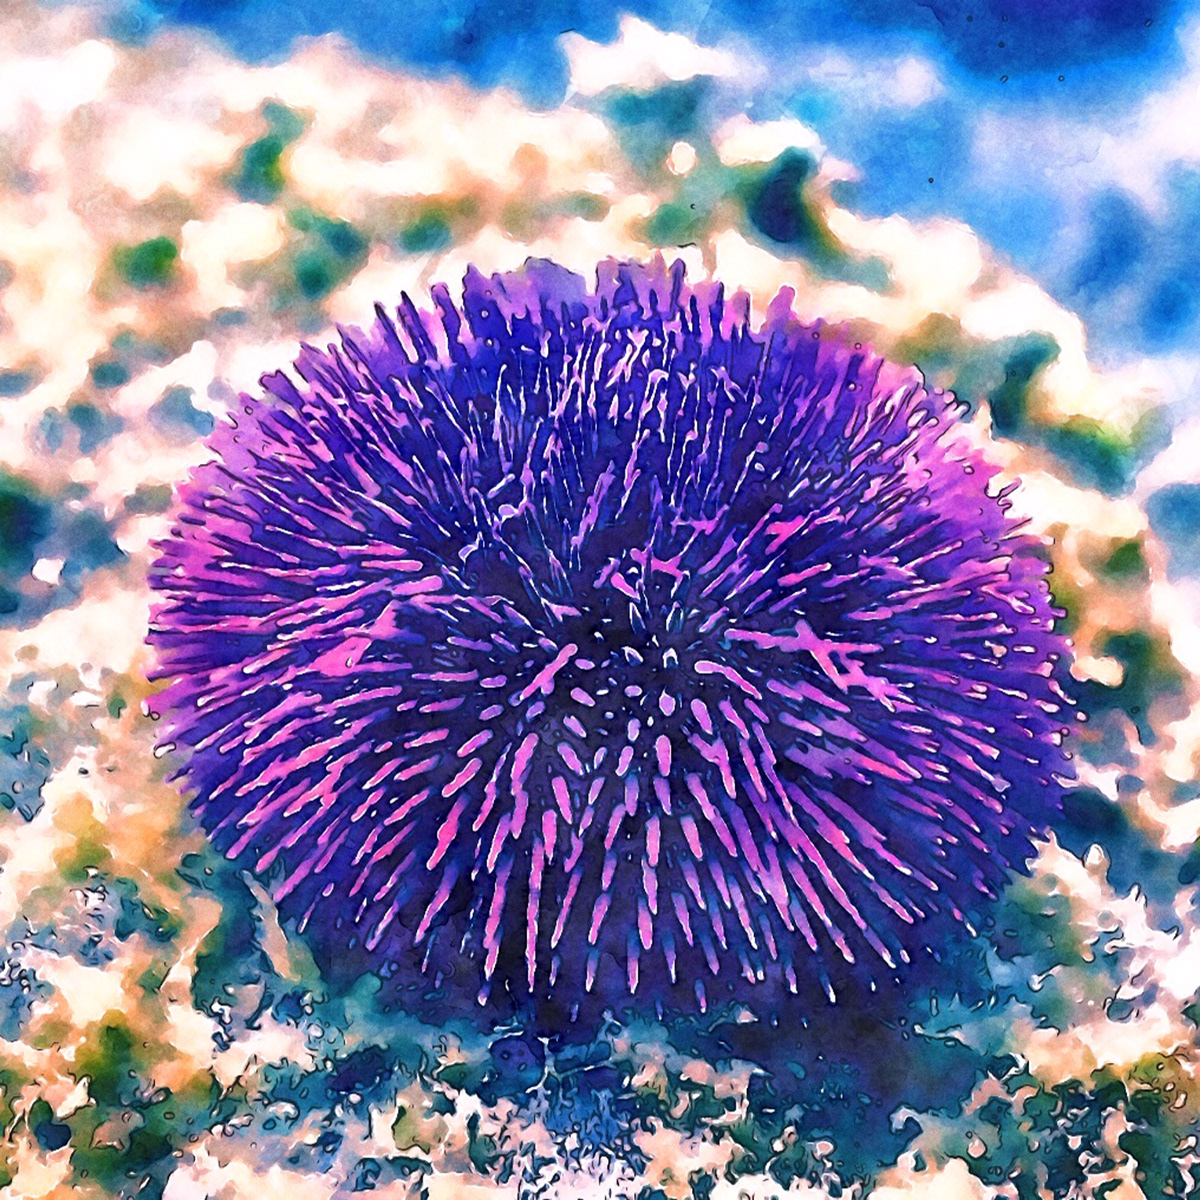 Almare coral CoralReef fish inspiration sea starfish underwater urchin Whale